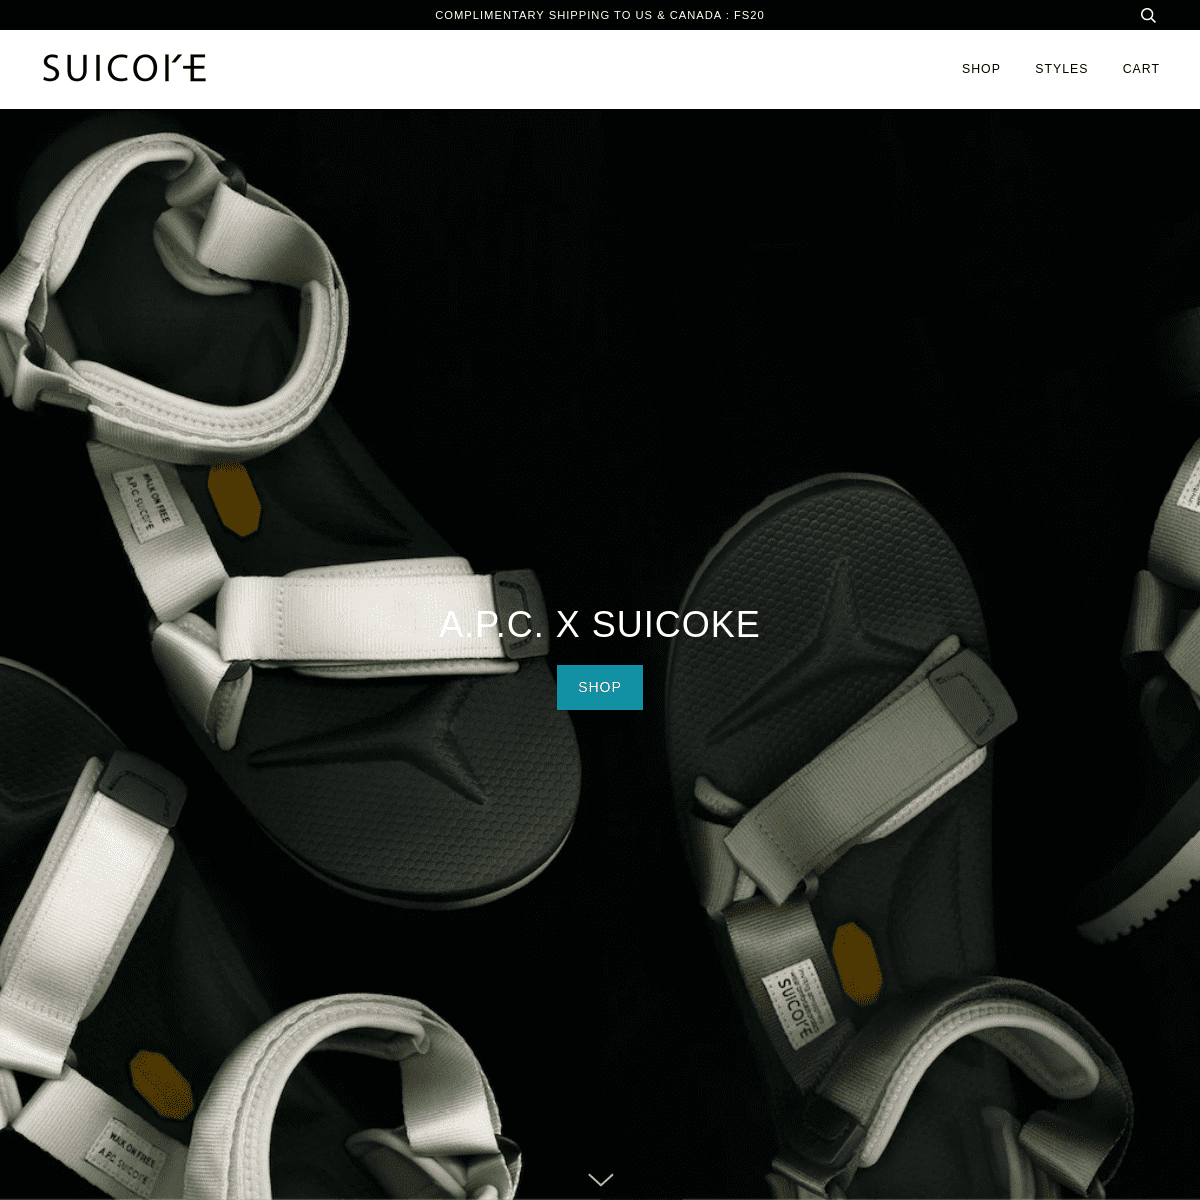 A complete backup of suicoke.ca